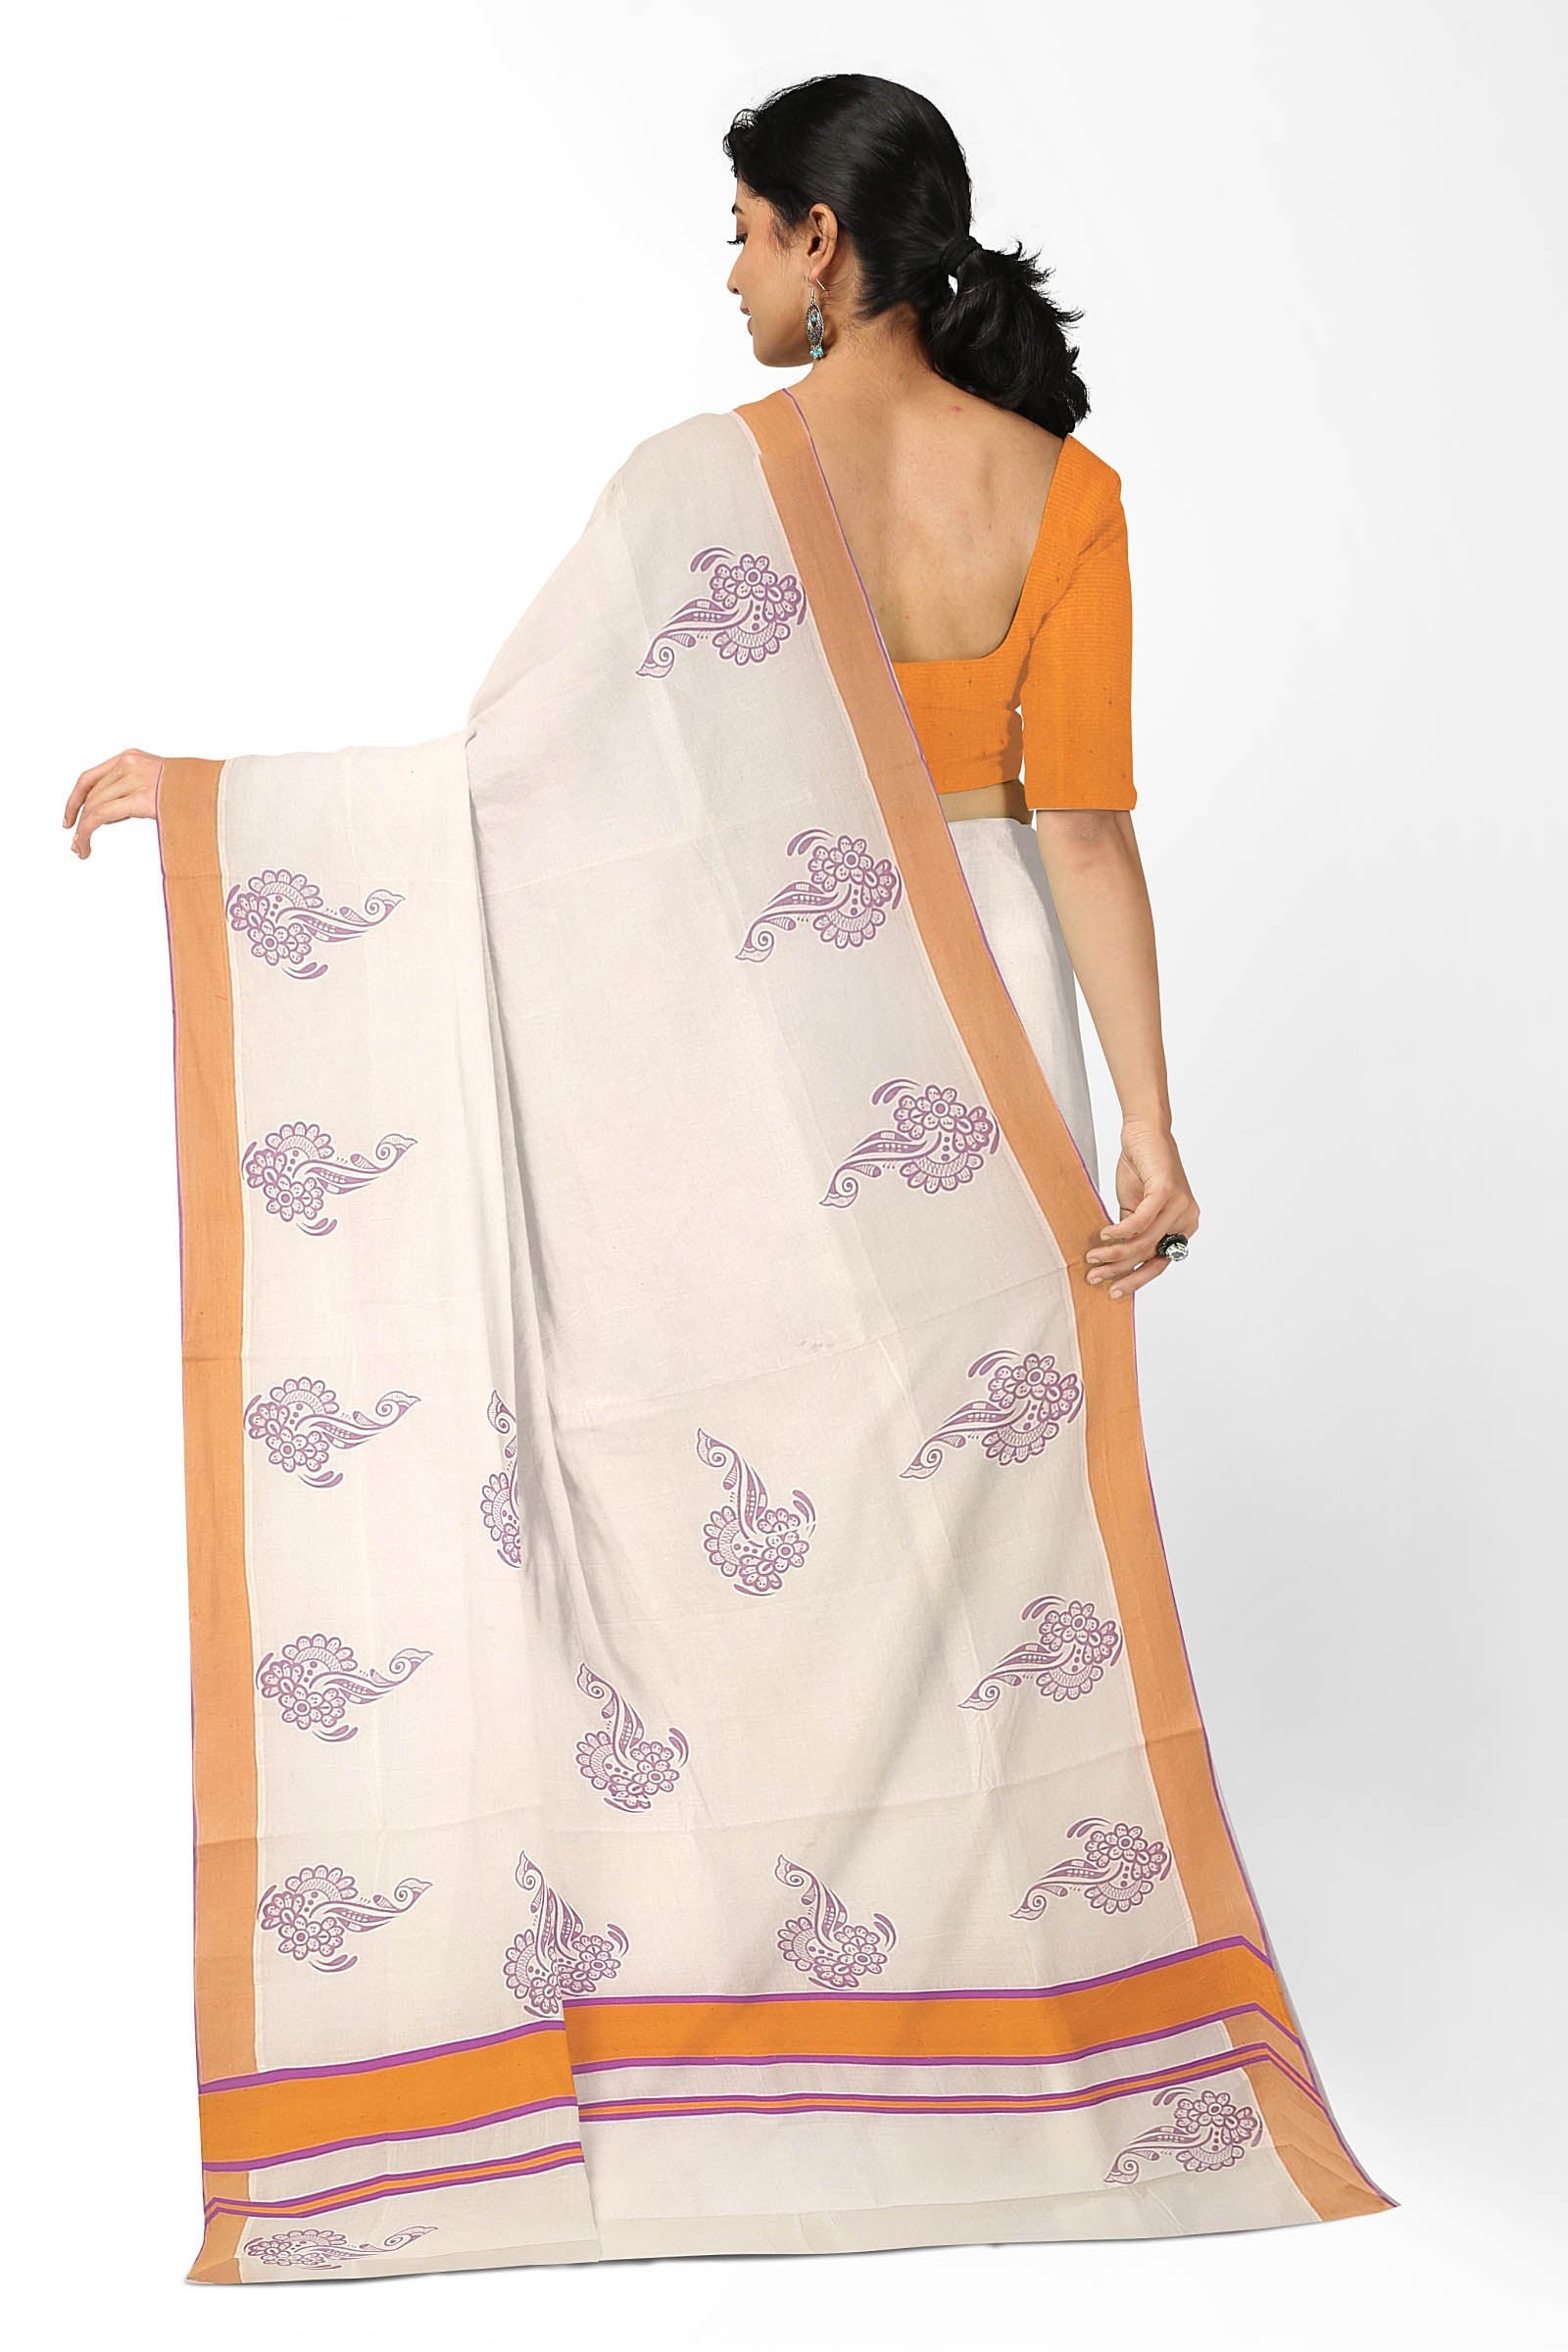 Pure cotton printed kerala saree